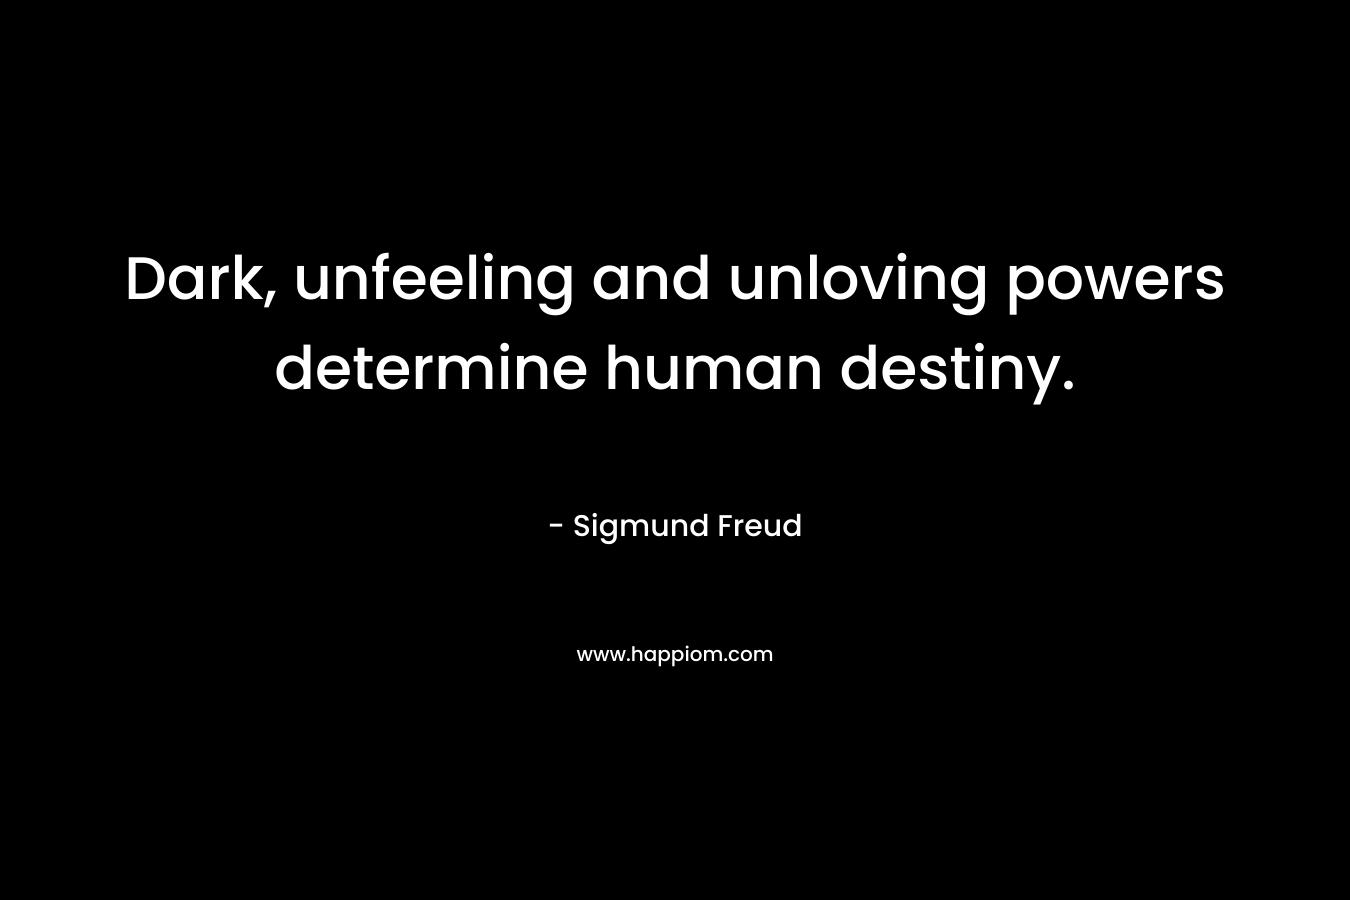 Dark, unfeeling and unloving powers determine human destiny.